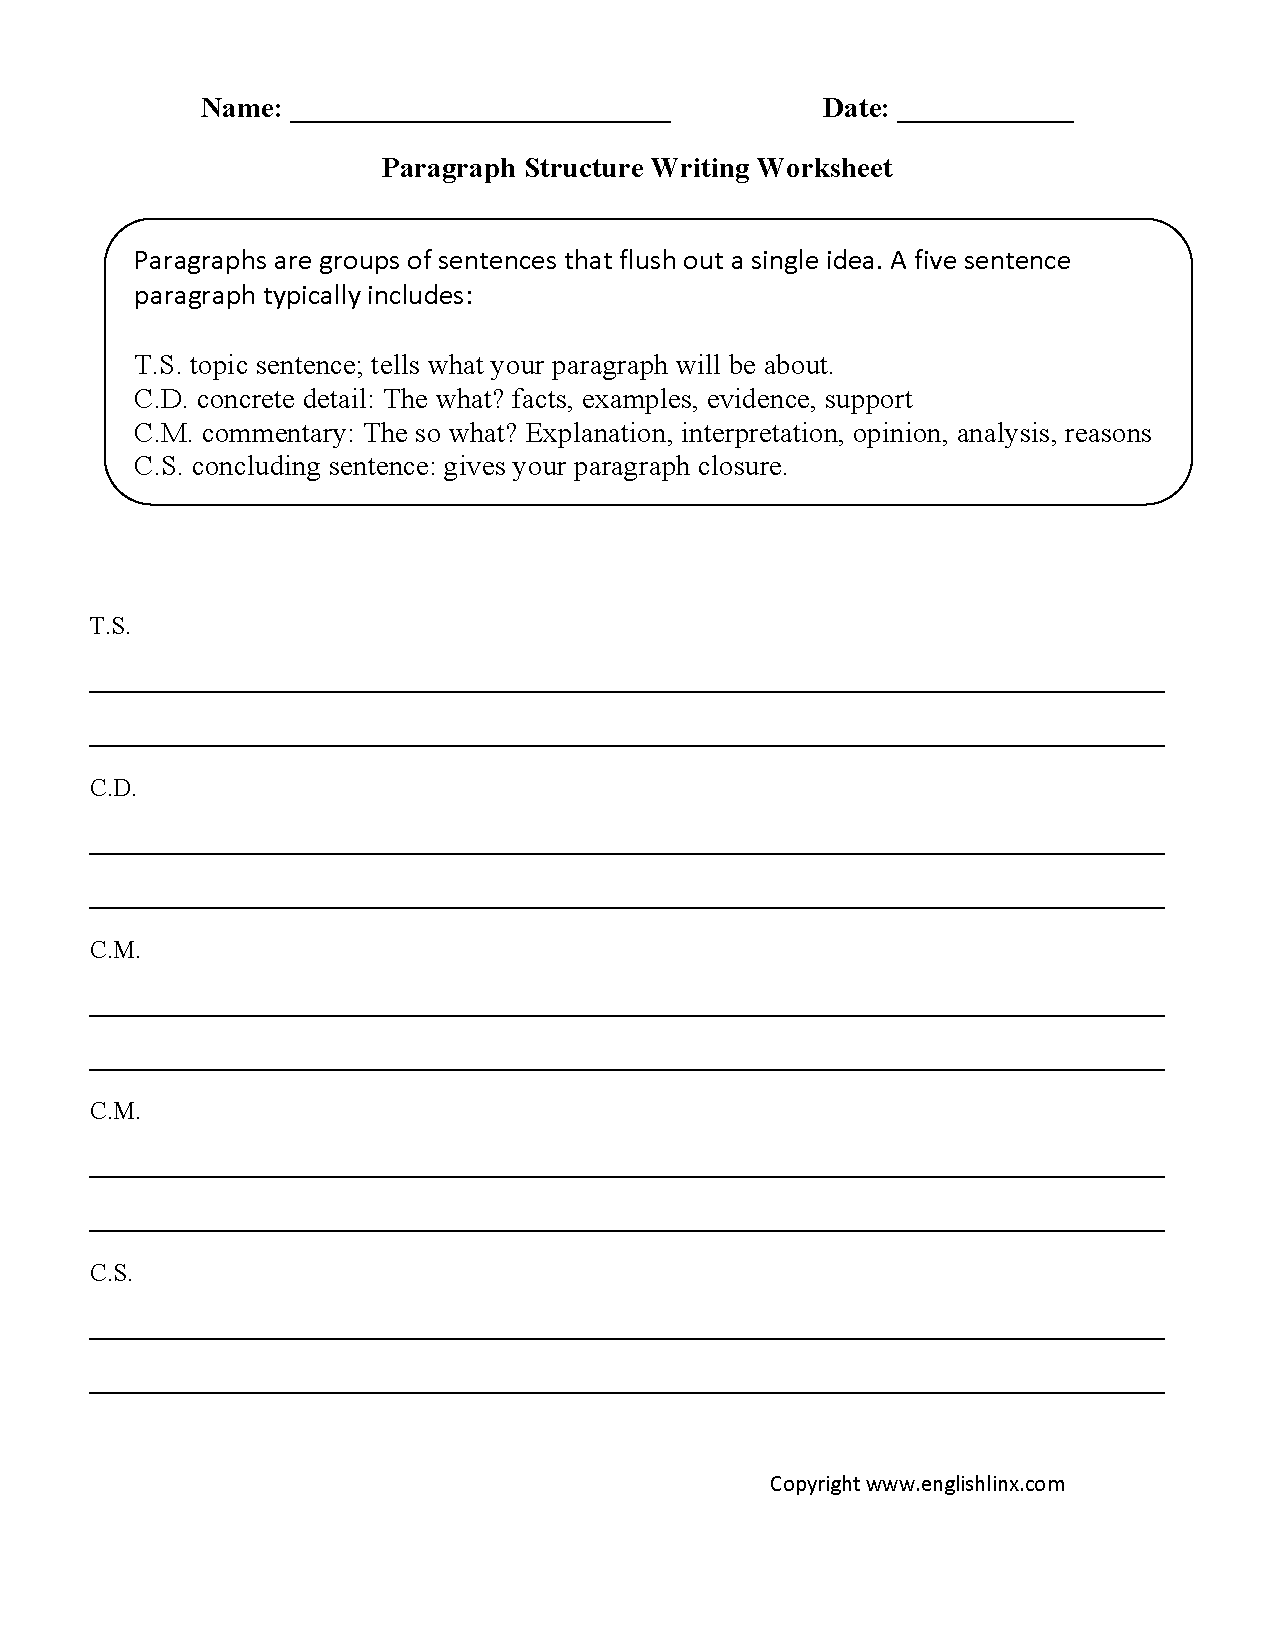 17-free-paragraph-writing-worksheets-worksheeto